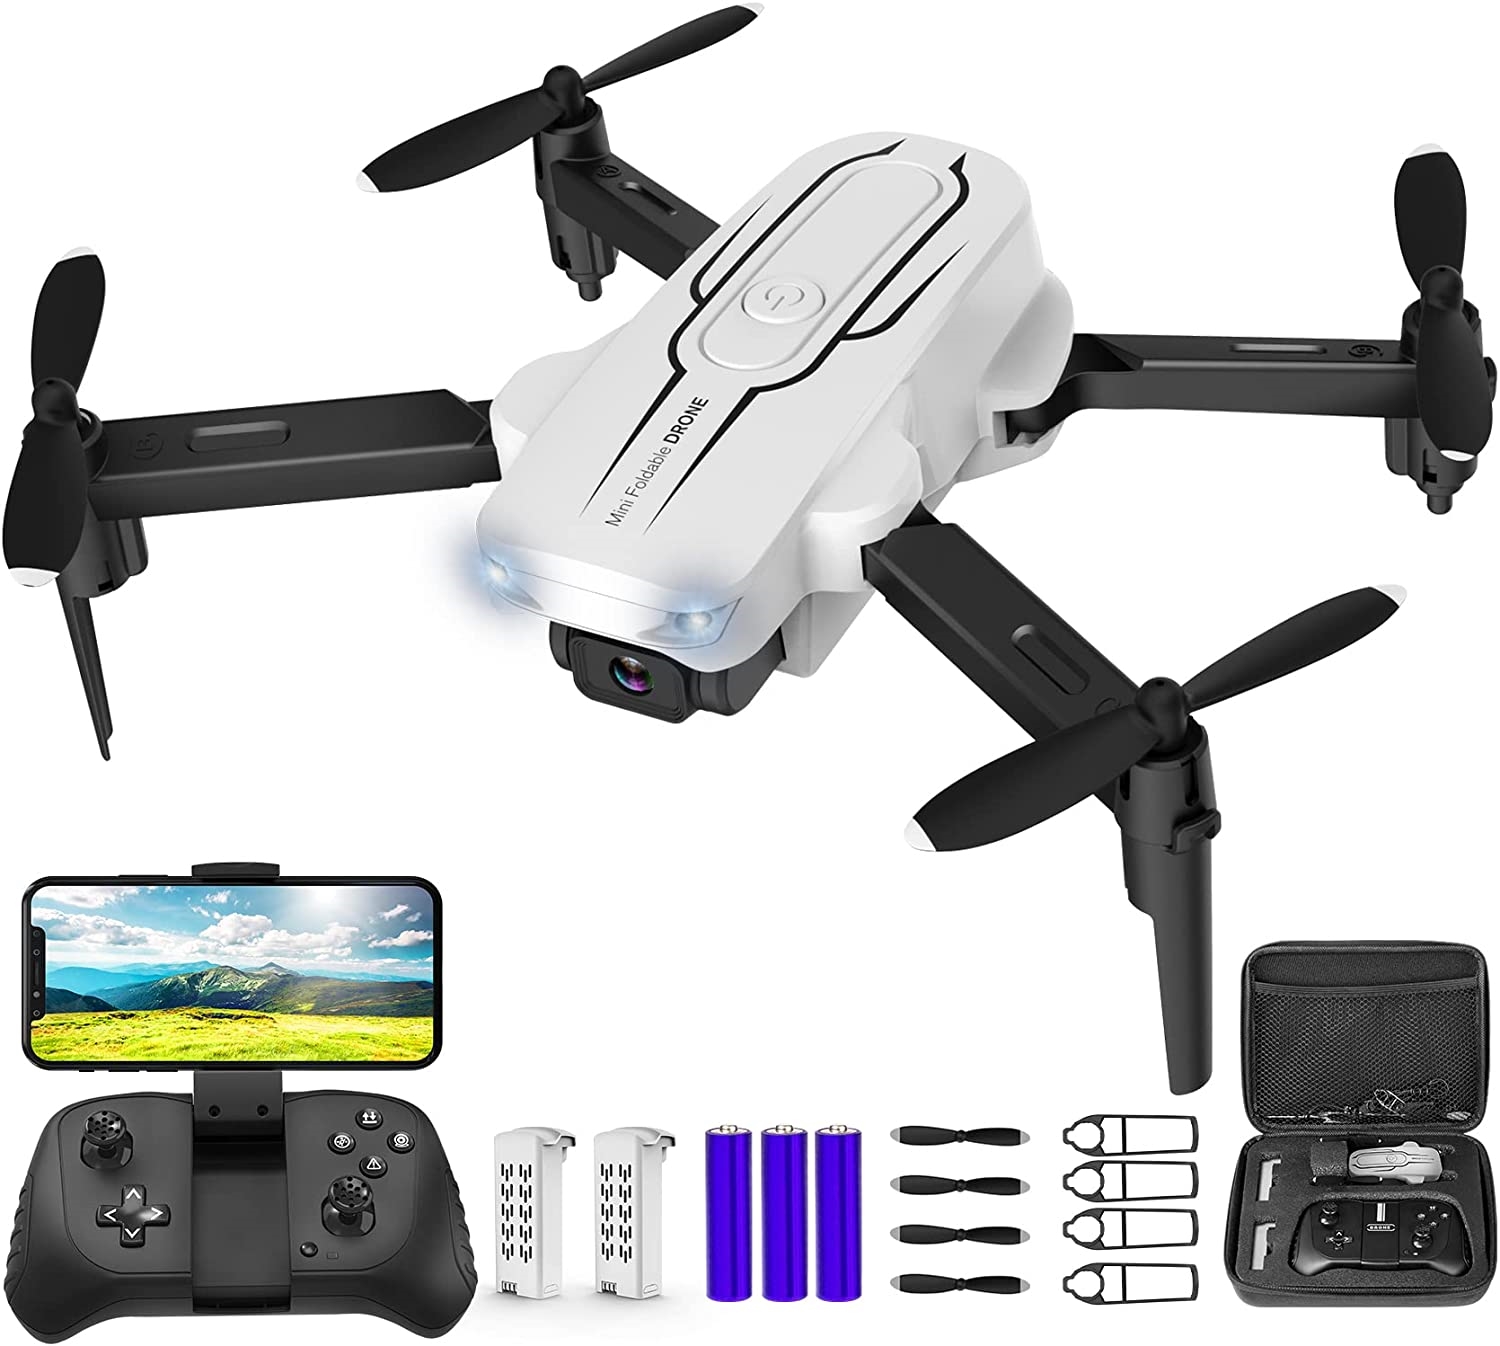 Oviliee Mini Drone with Camera | DeviceDaily.com